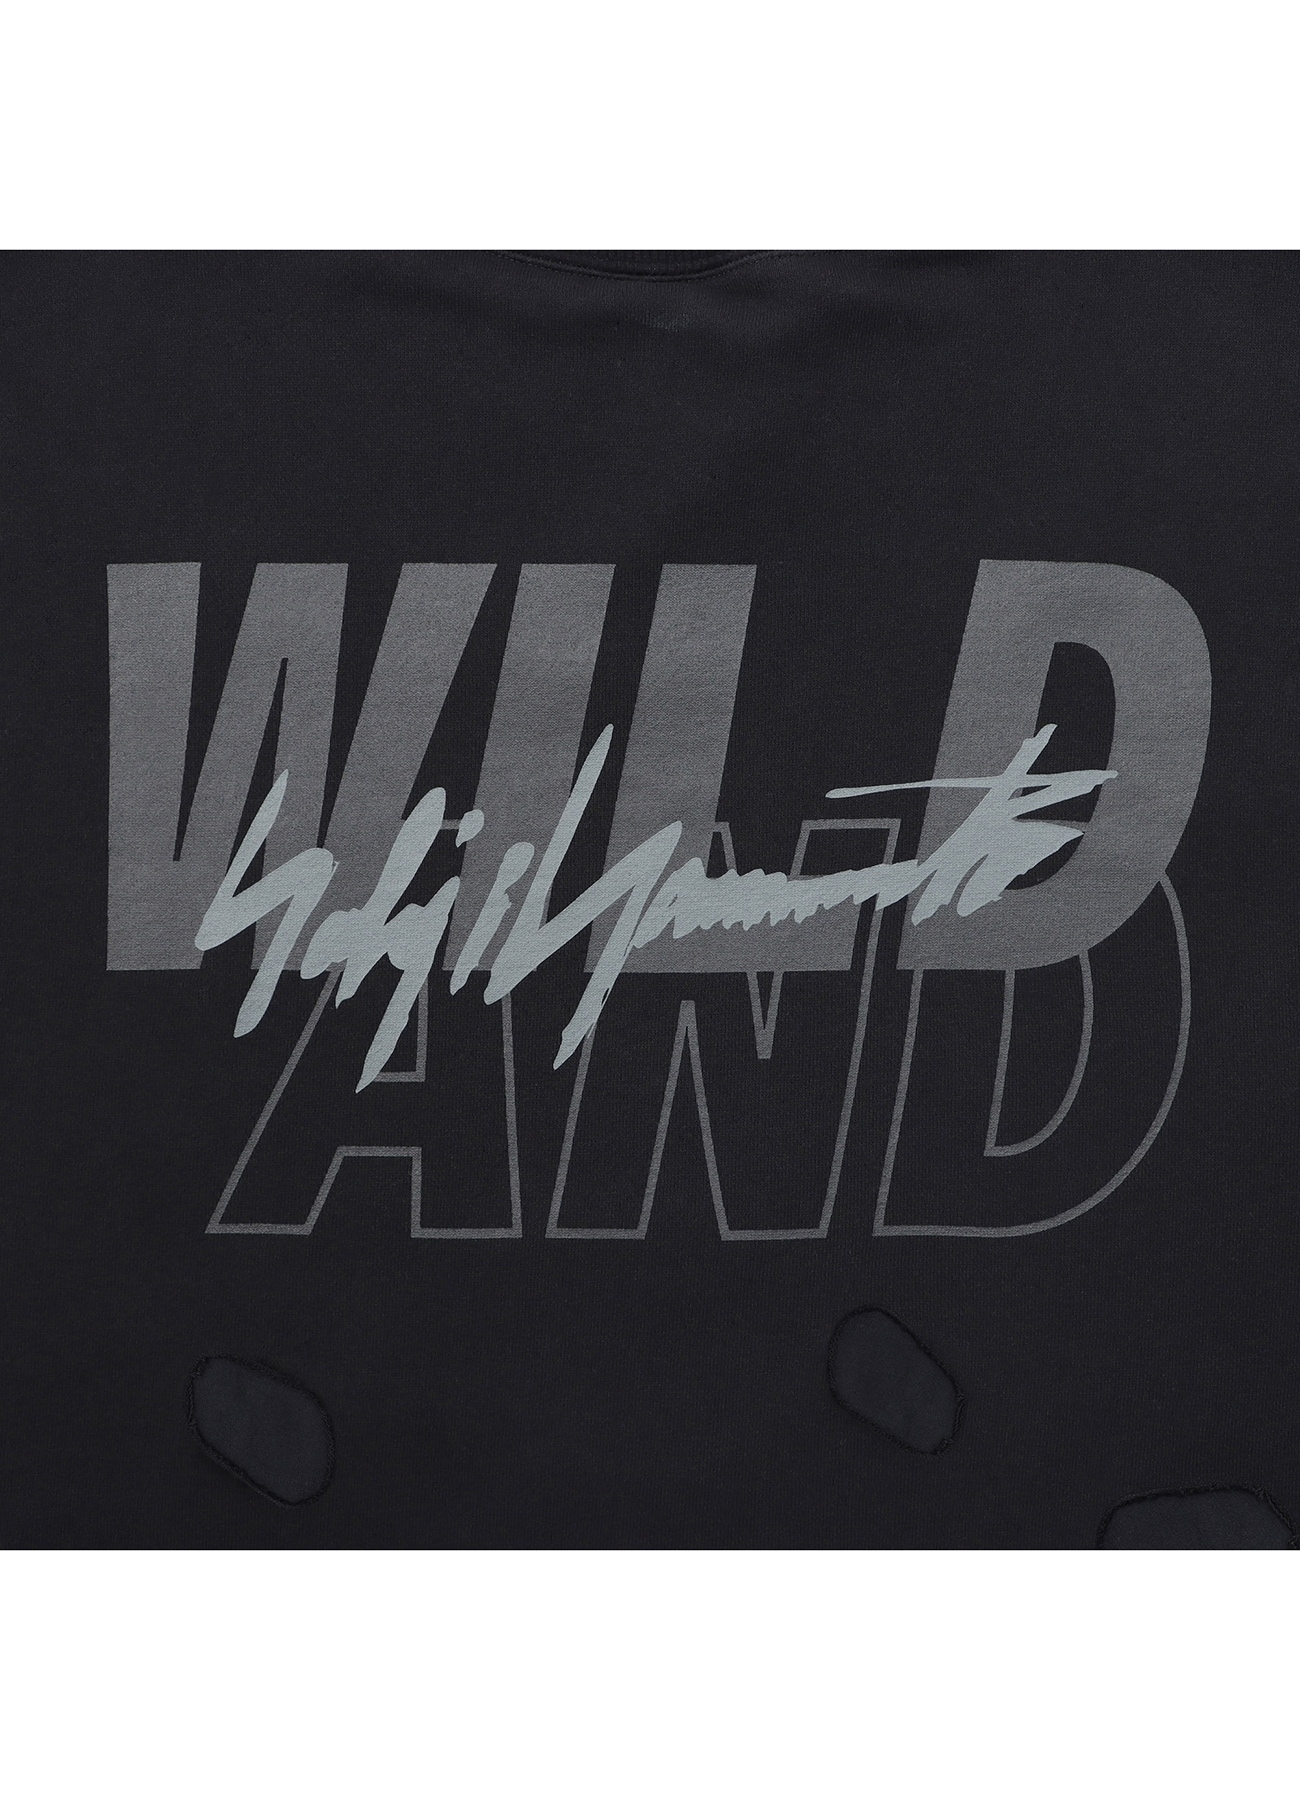 WILDSIDE × WIND AND SEA Damage Cutting Sweat Shirt